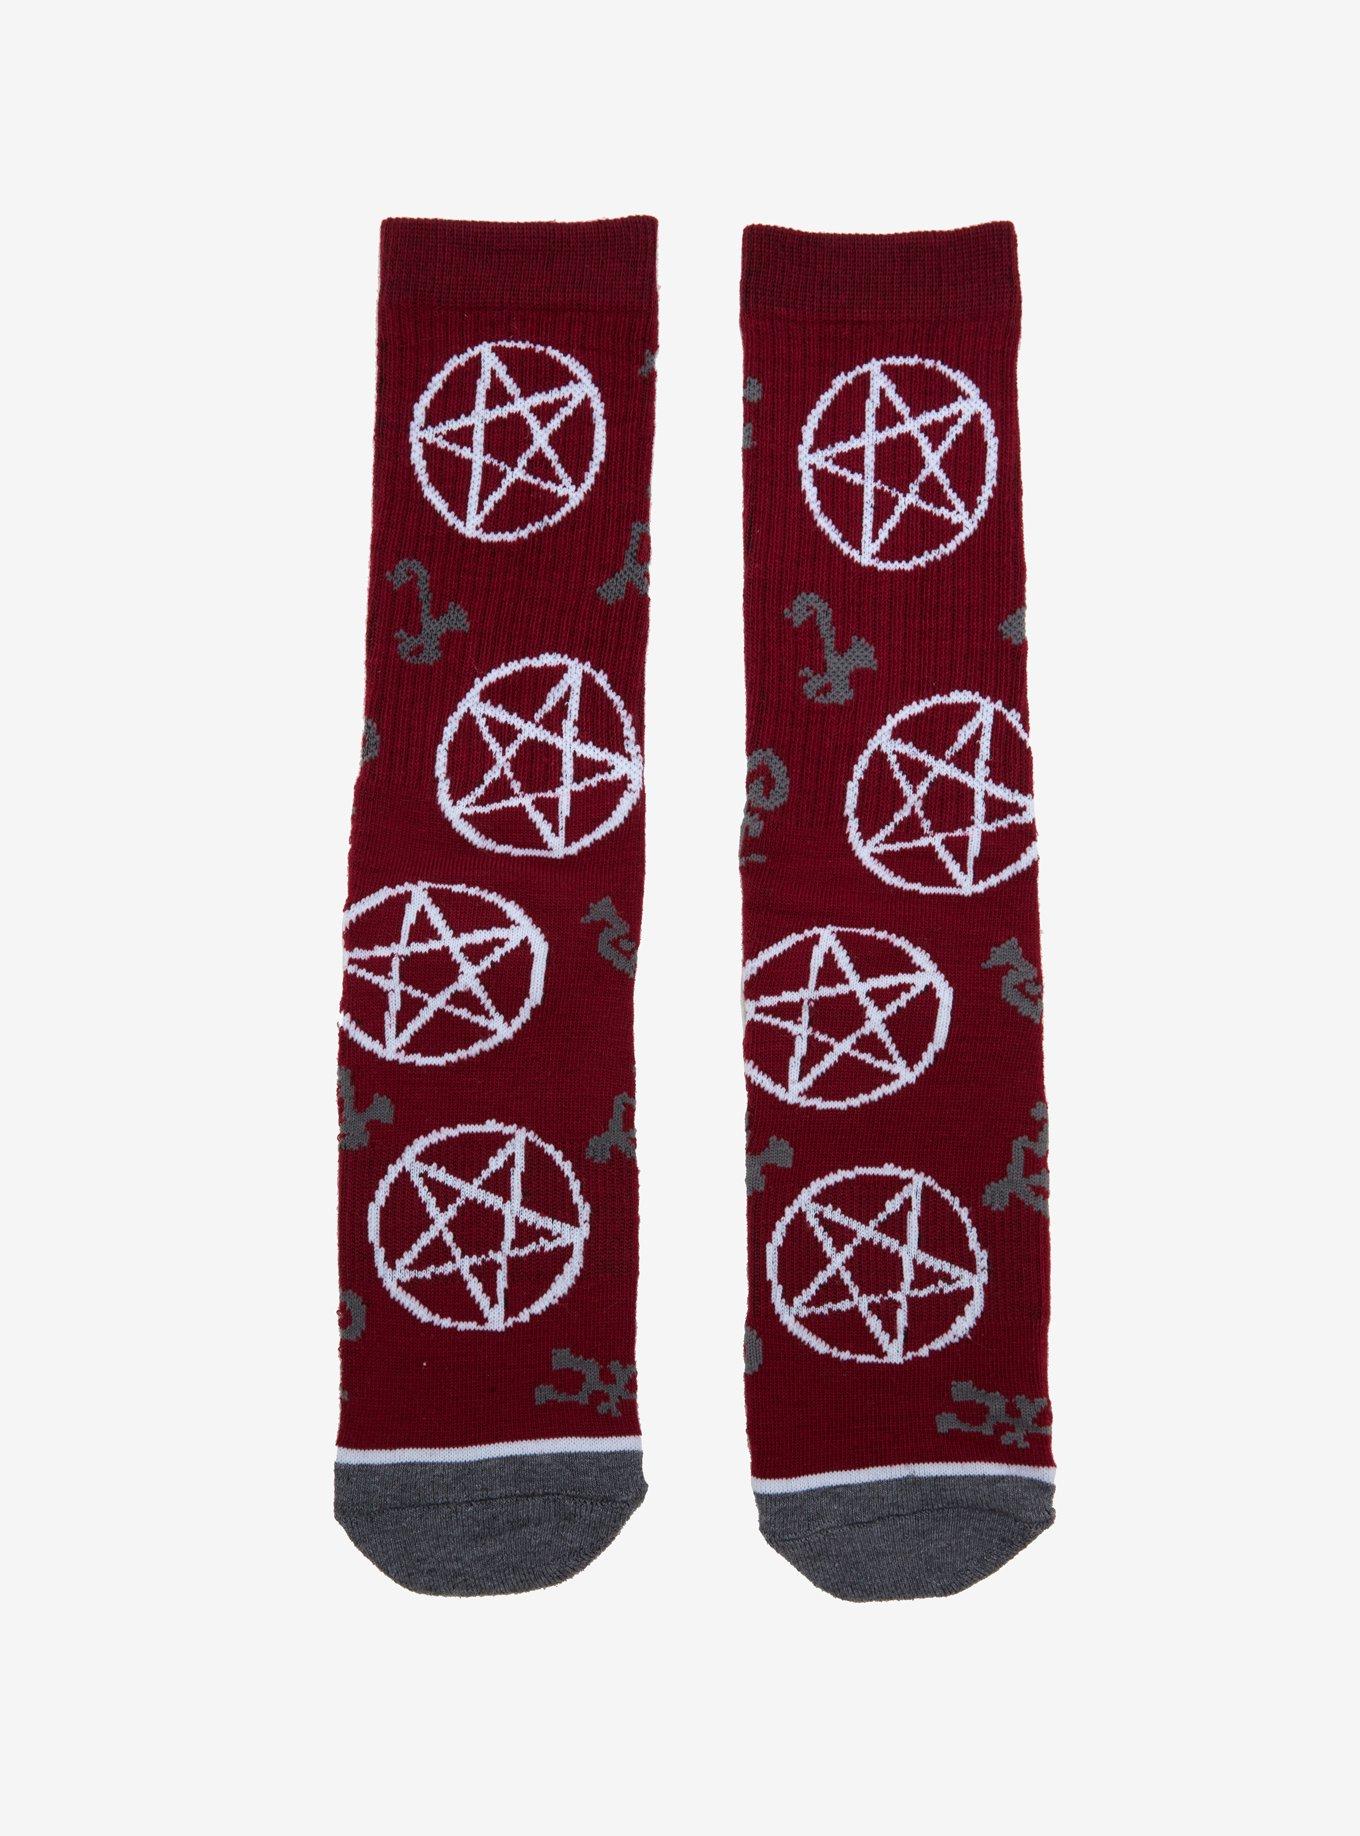 Supernatural Burgundy Symbols Crew Socks, , hi-res